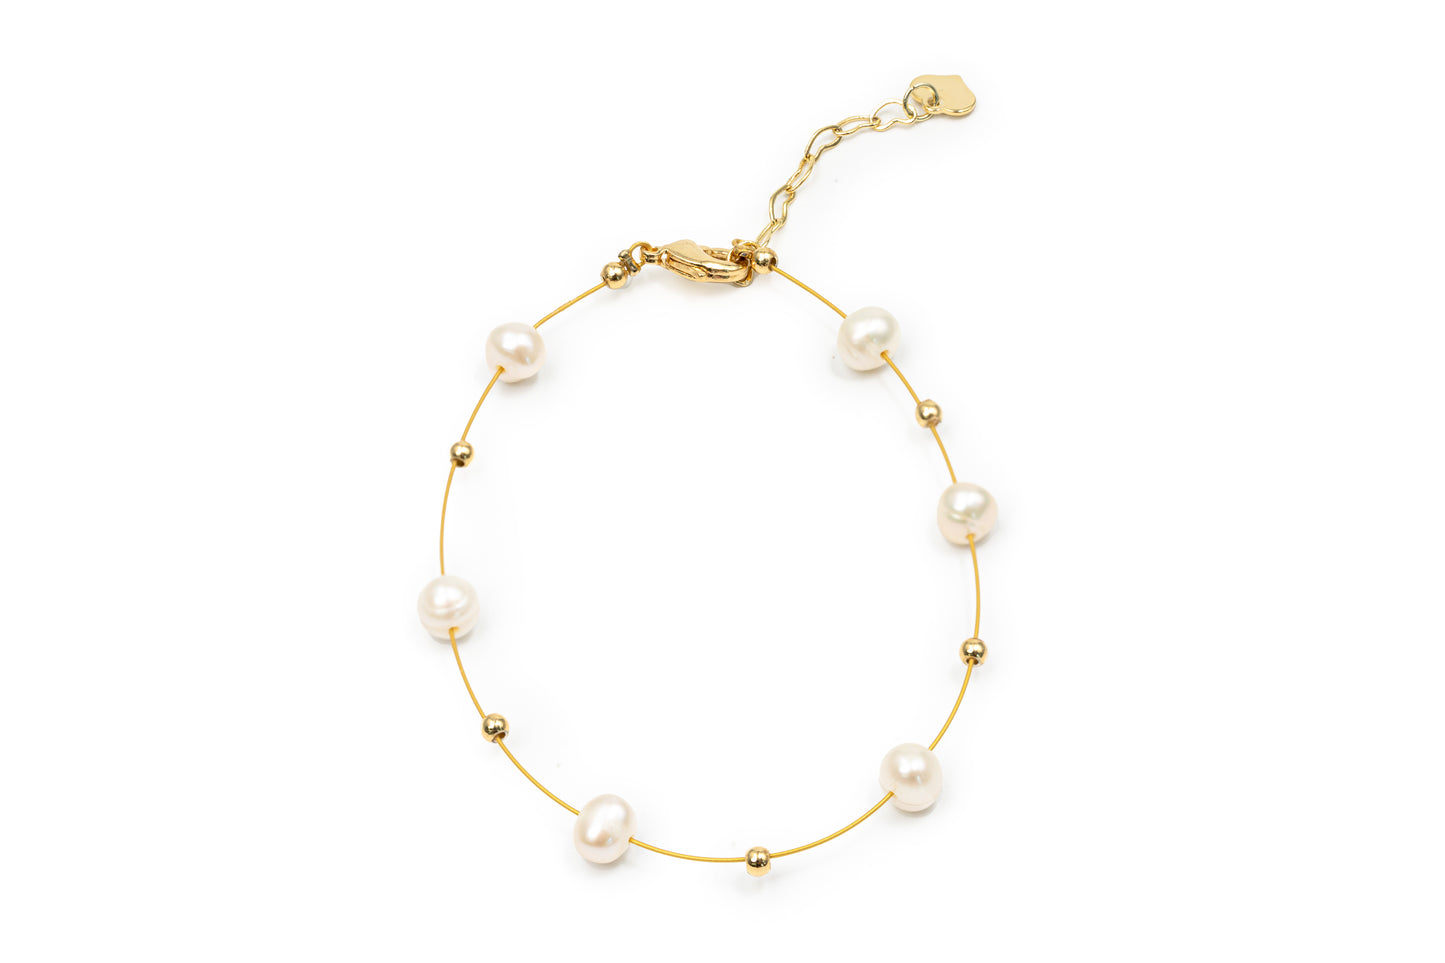 Simplify Classy Bracelet - Golden Bracelet for Women